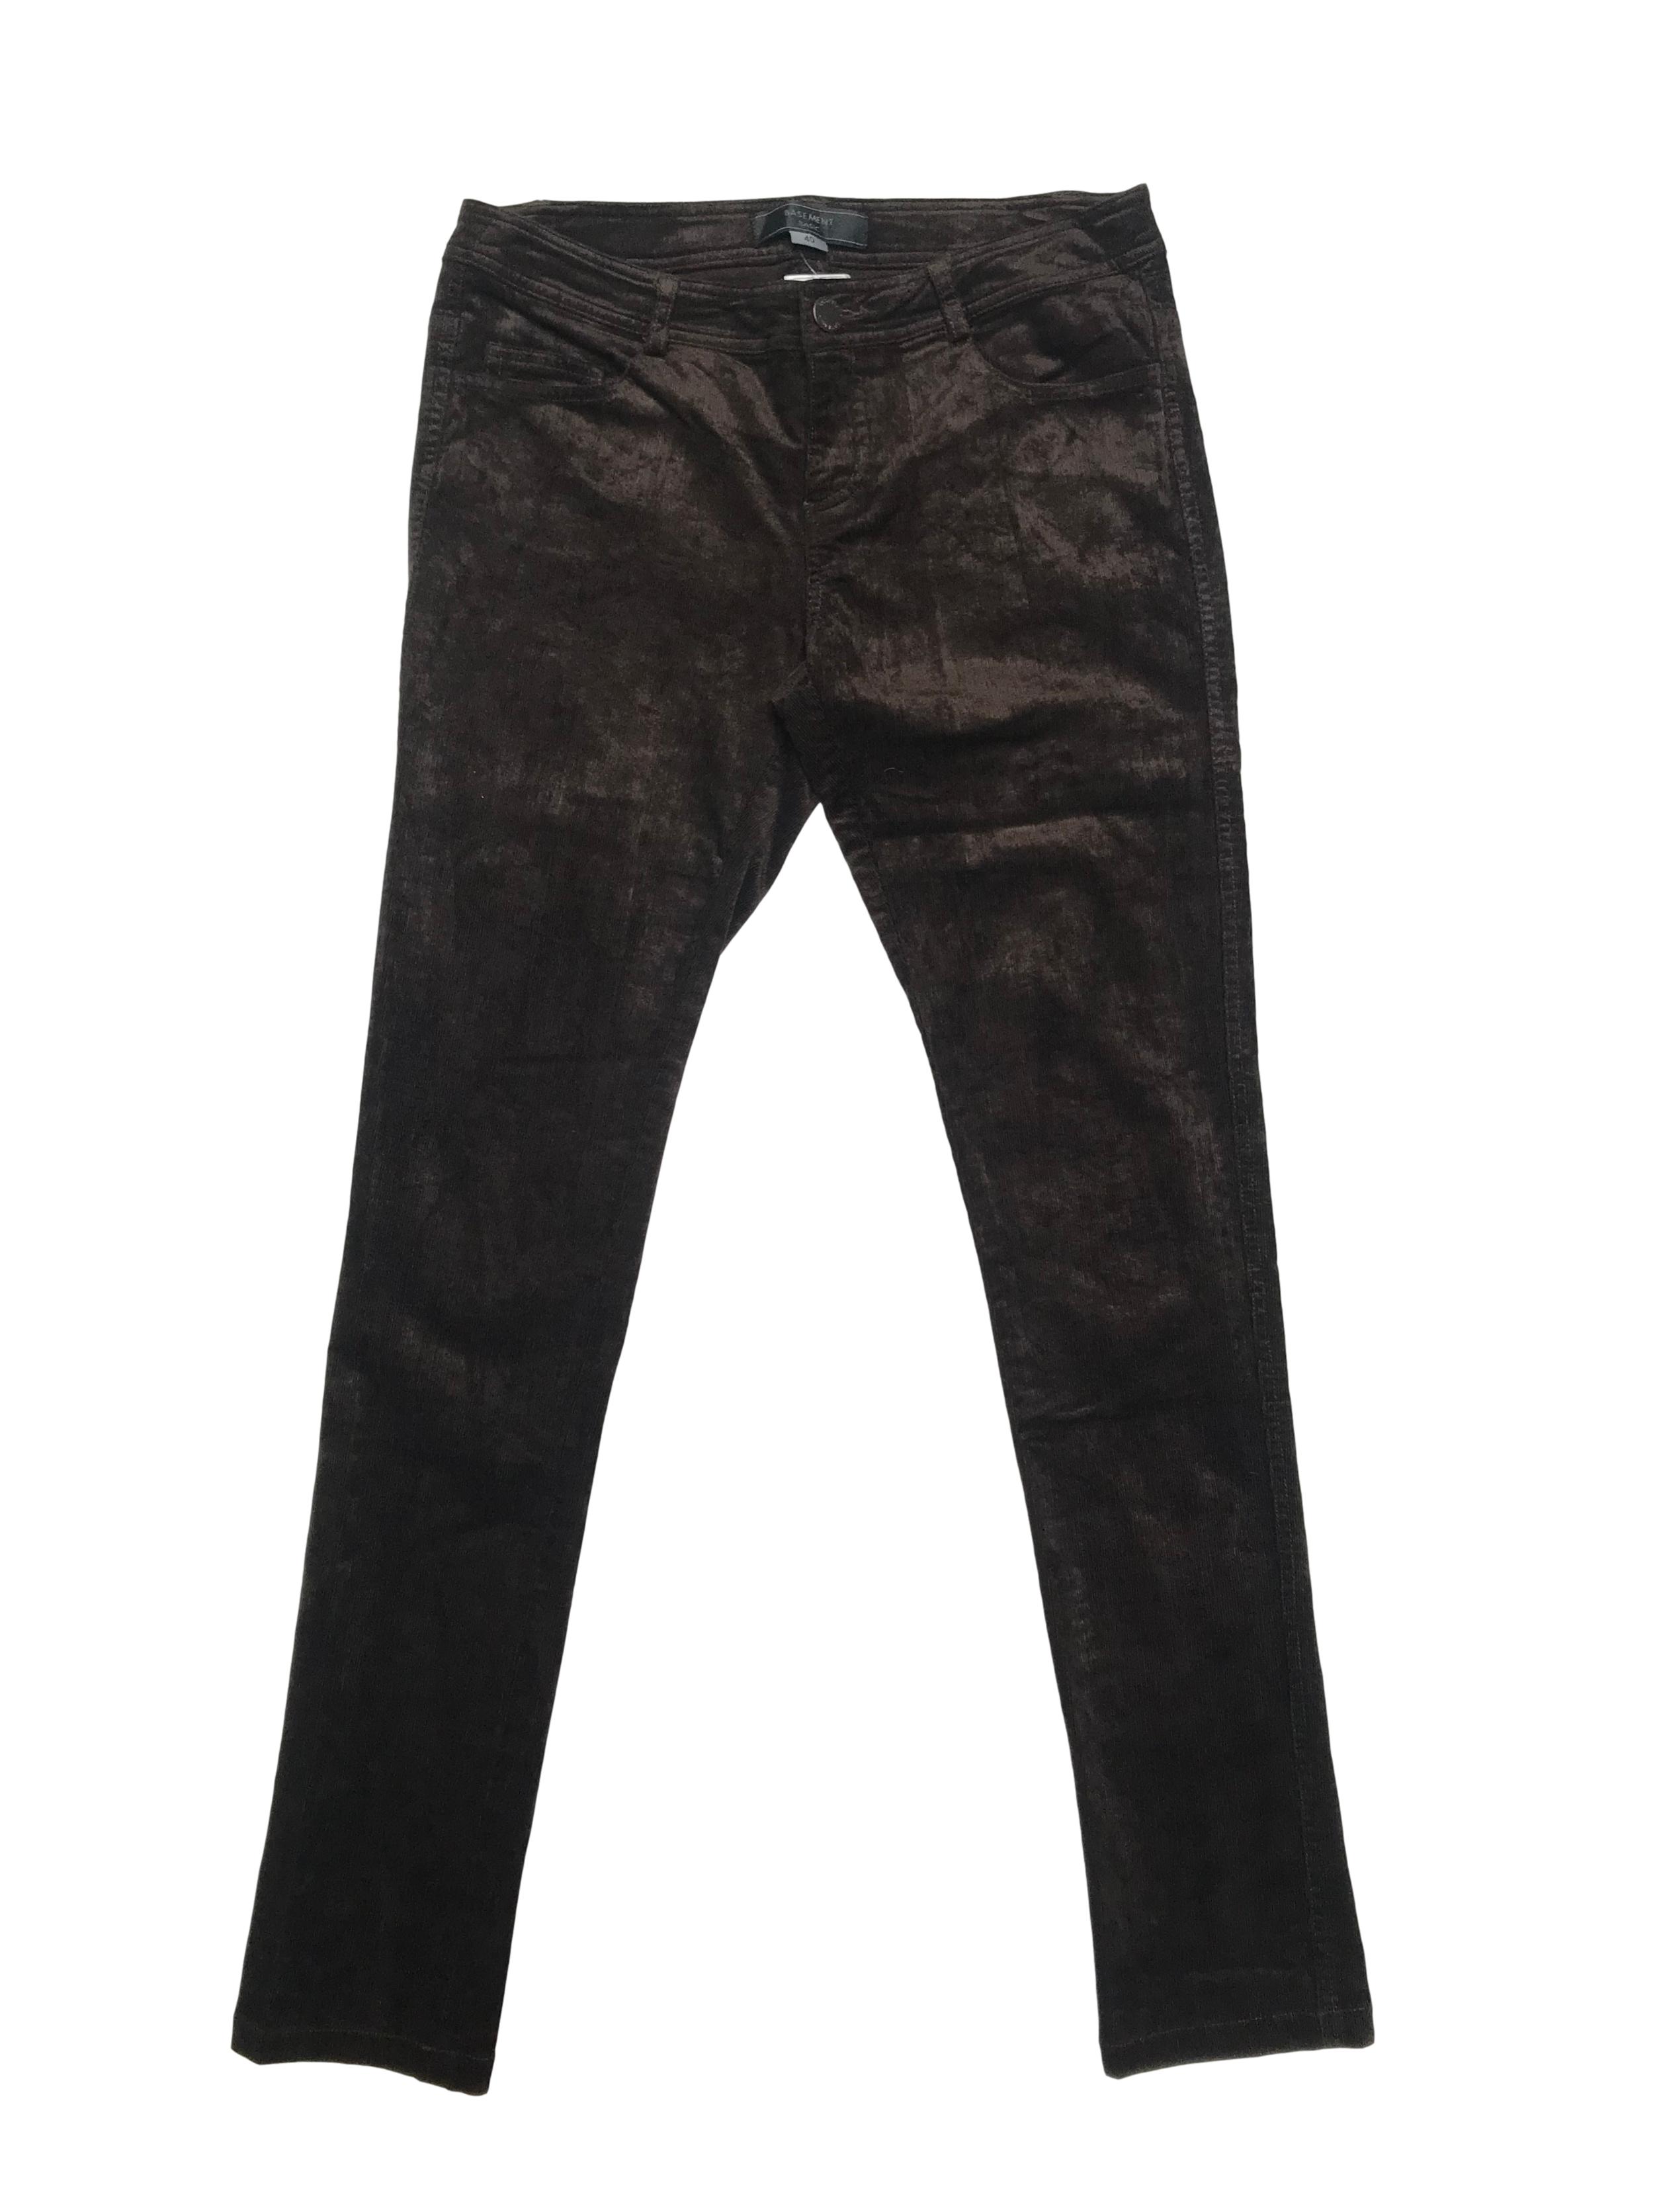 Pantalón Basement de corduroy marrón satinado, corte pitillo. Pretina 80cm